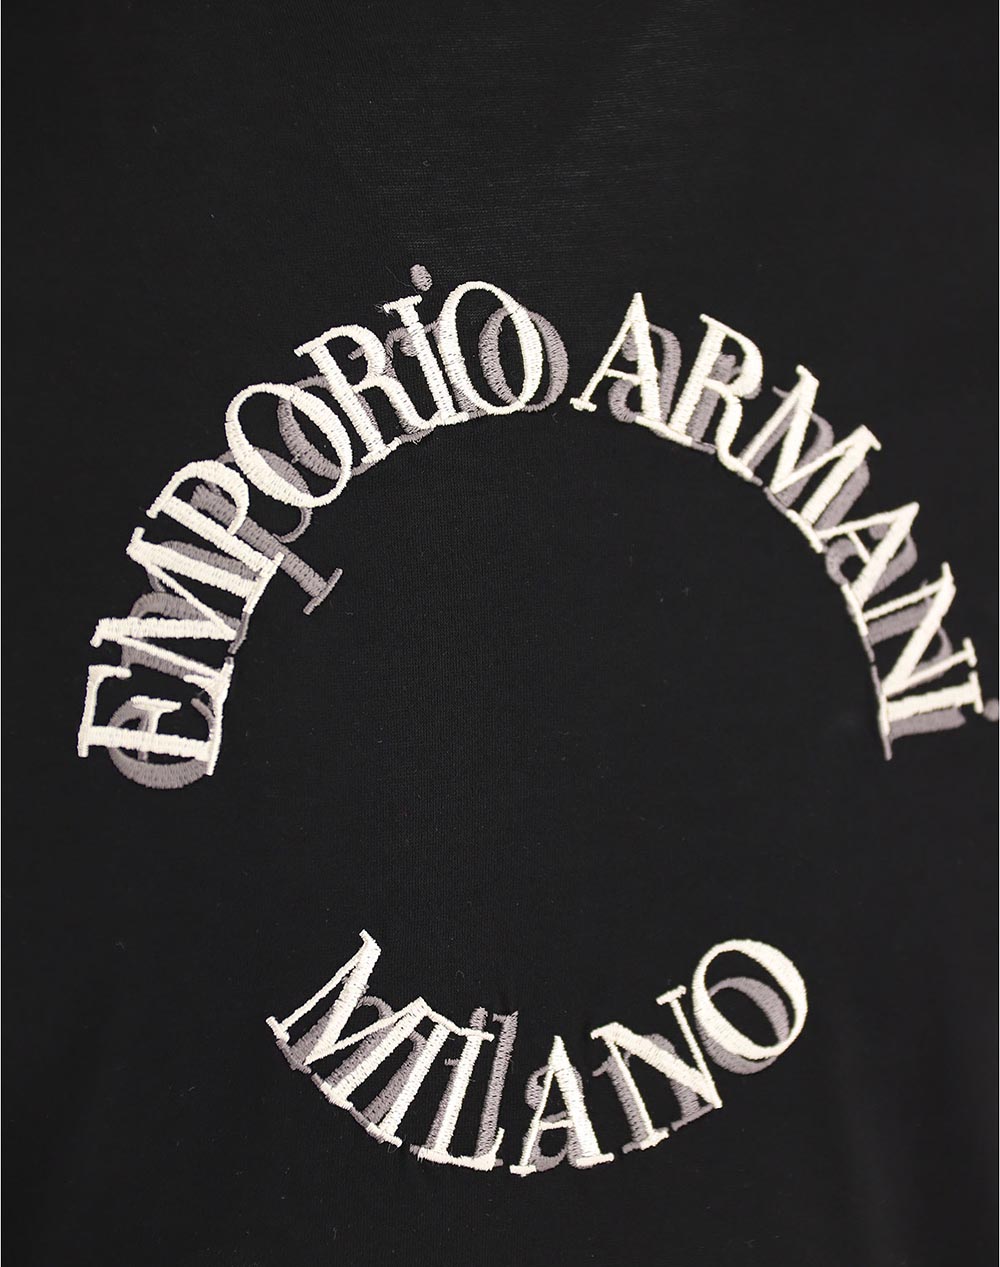 EMPORIO ARMANI T-SHIRT